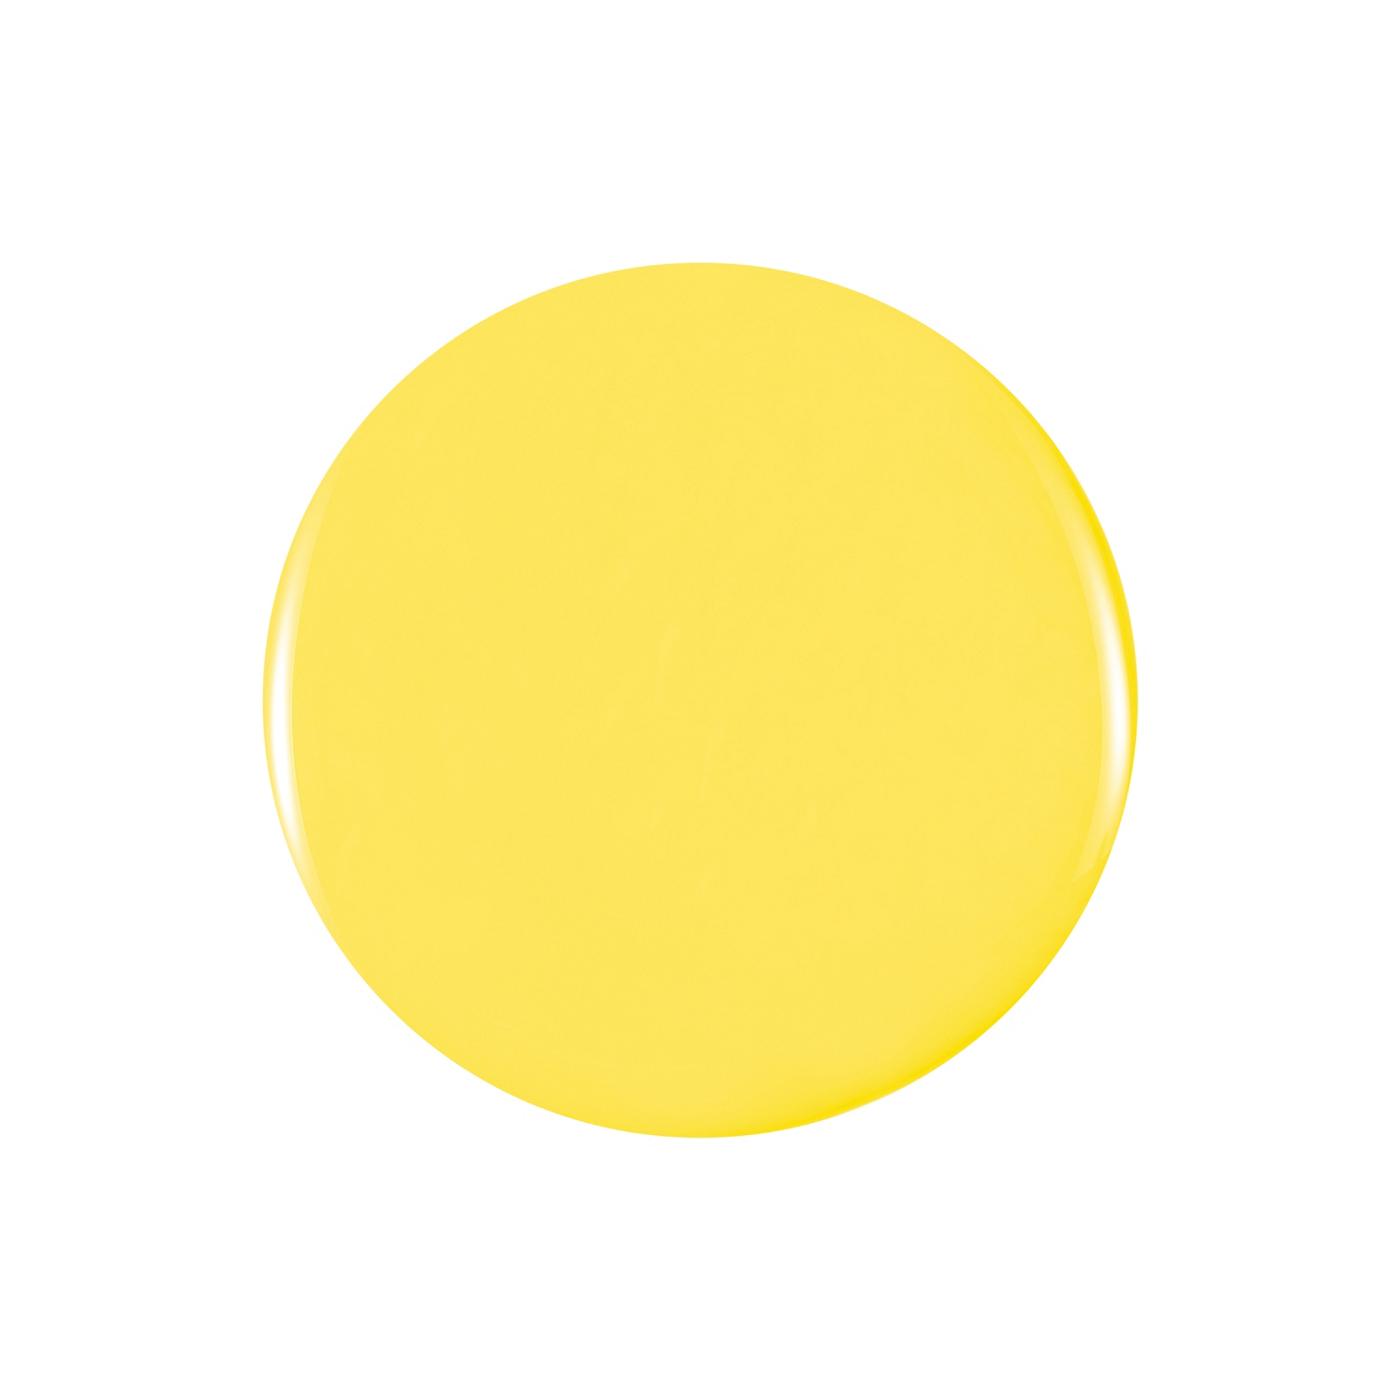 Sinful Colors Bold Color Nail Polish - Yolo Yellow; image 2 of 2